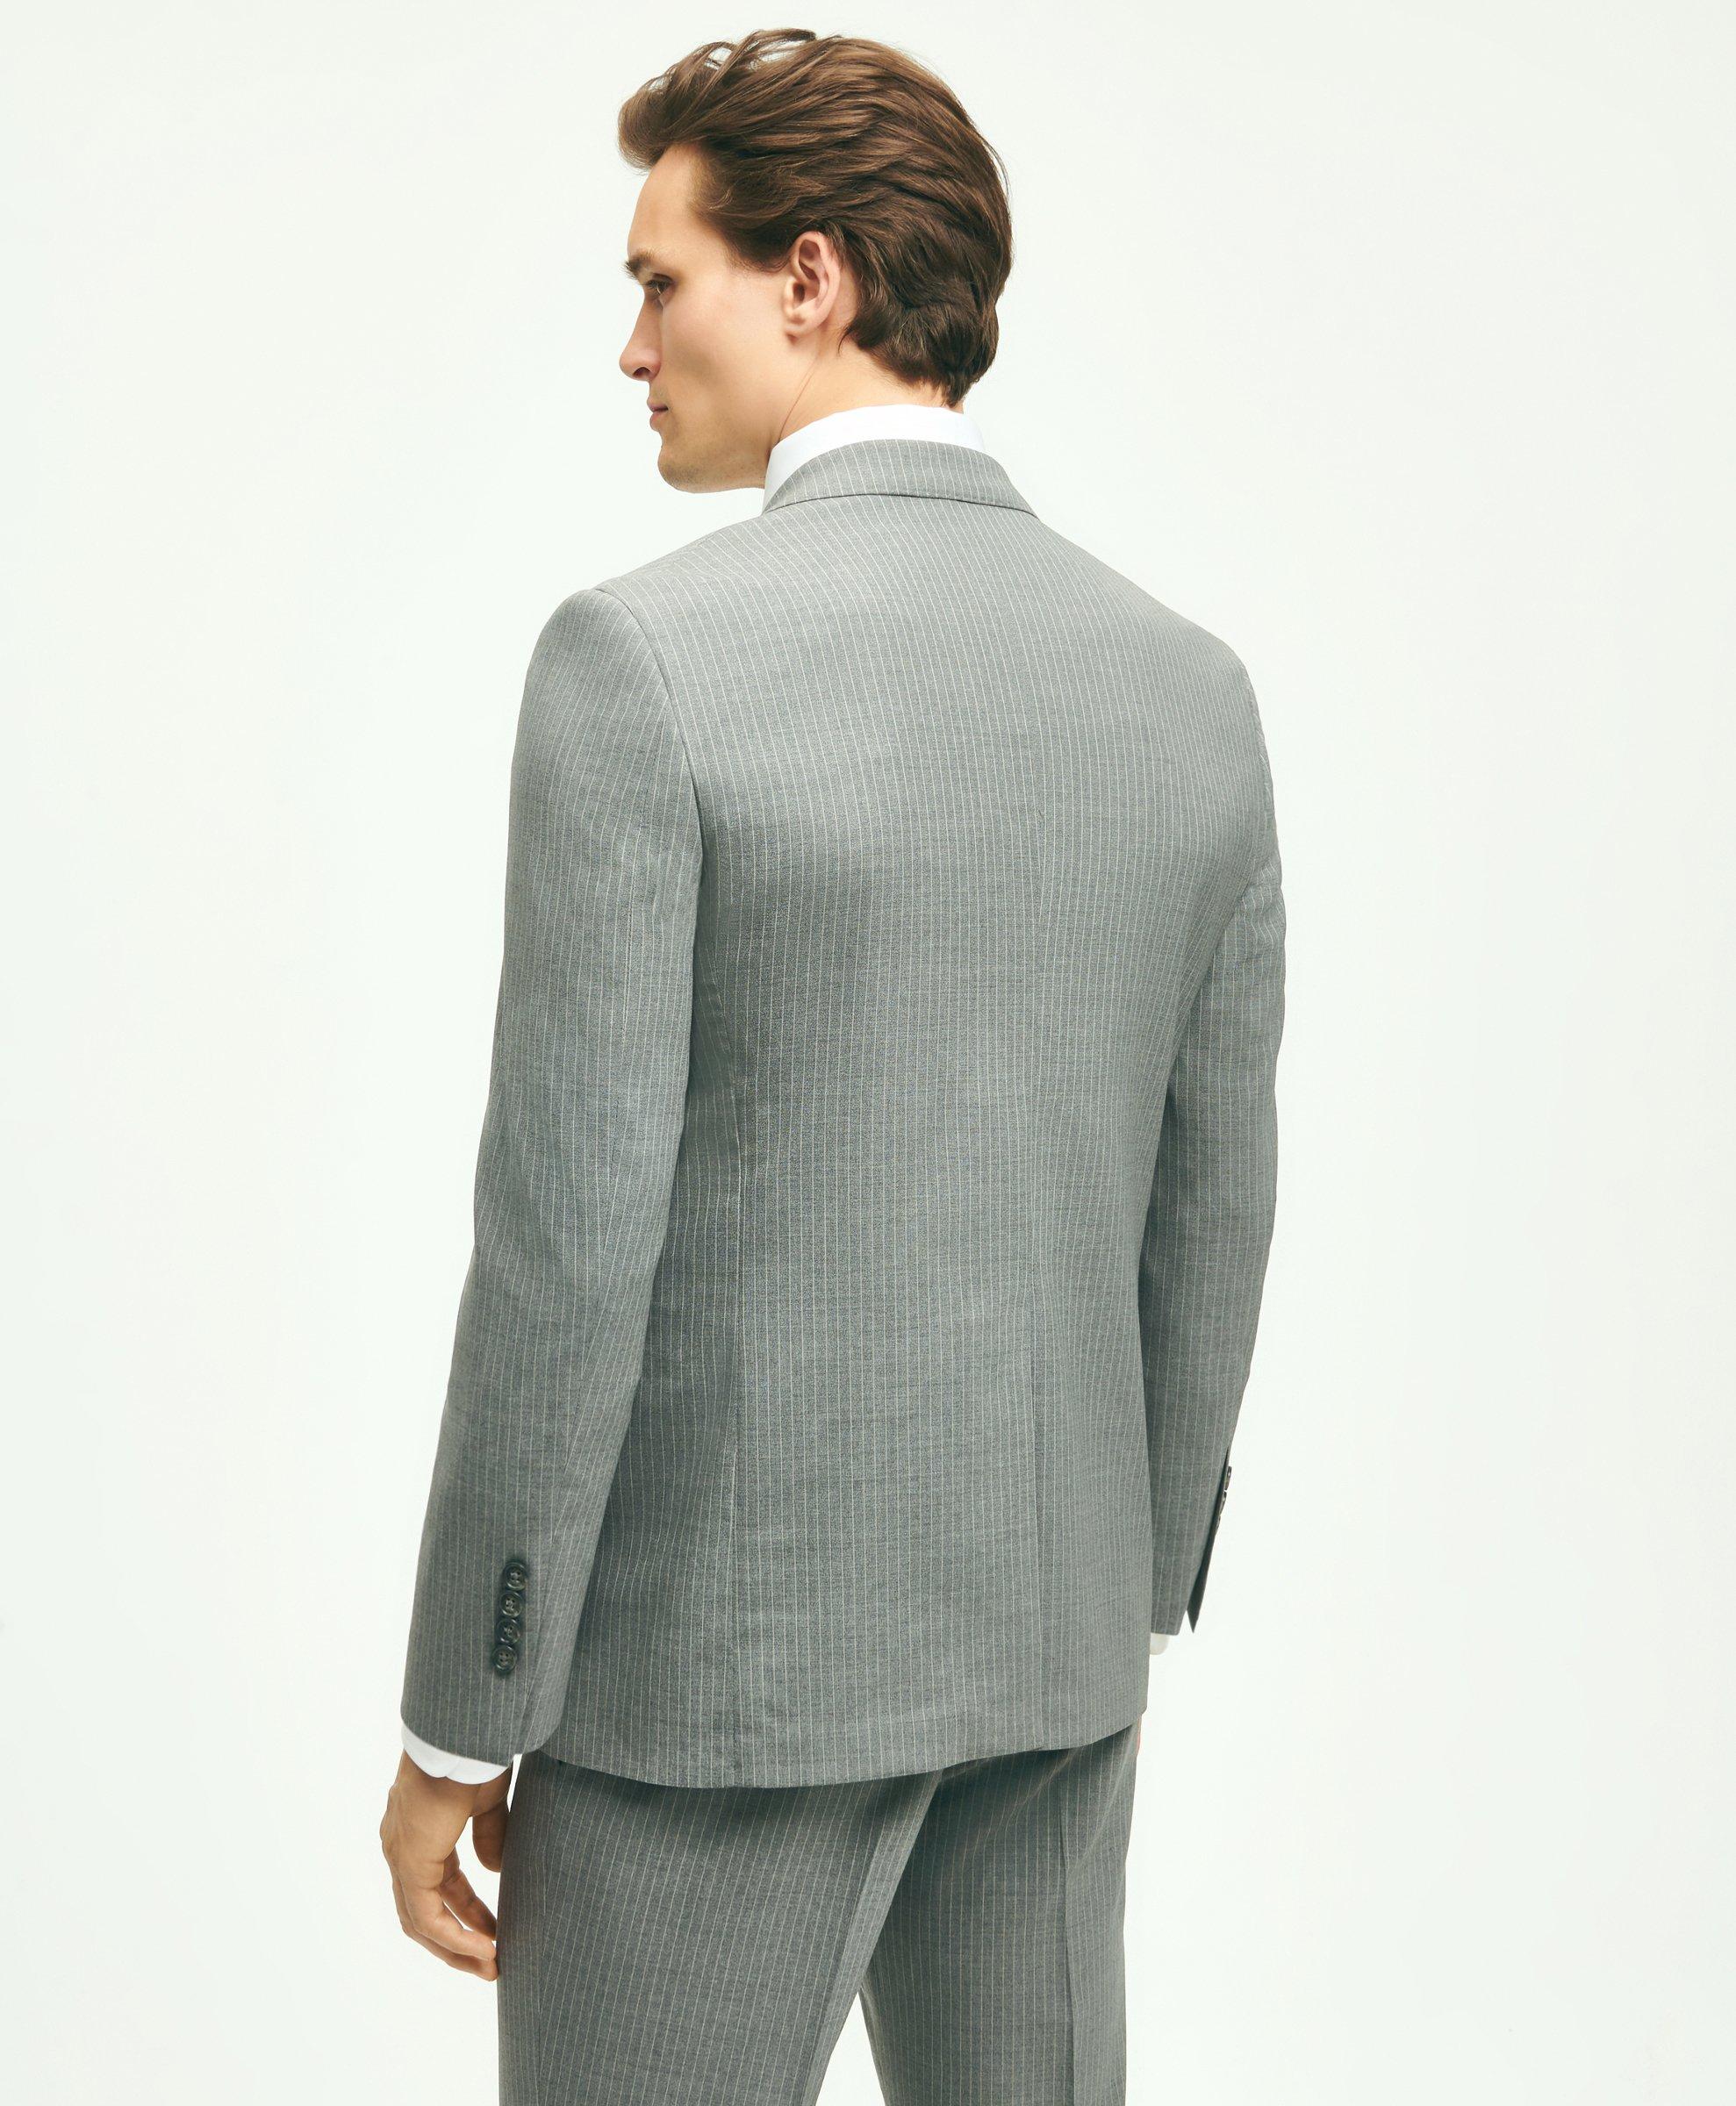 Men's Classic Fit Grey Pinstripe 2-Piece Suit (Jacket and Pants